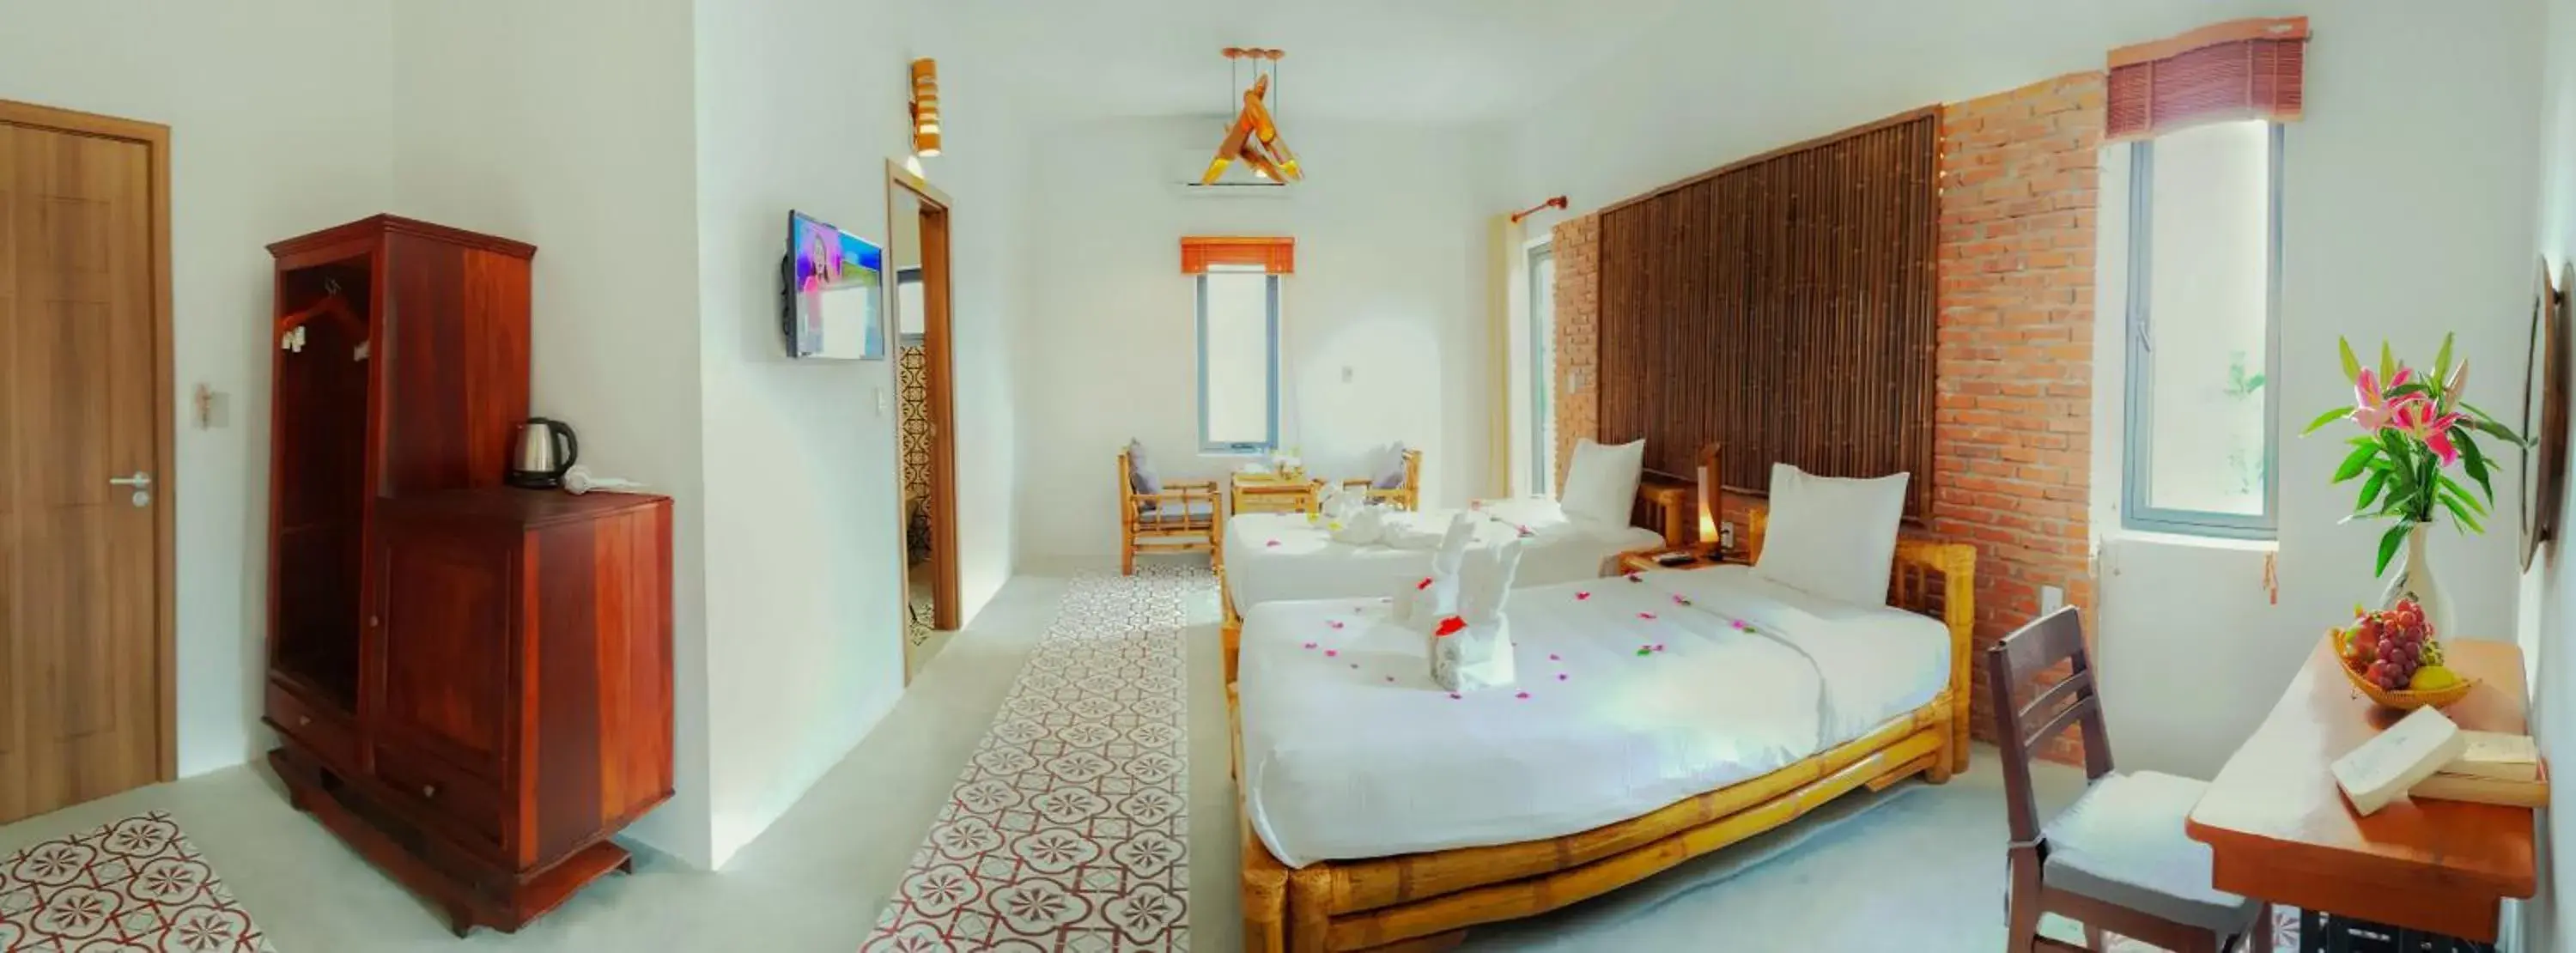 Bedroom, Dining Area in Hoi An Rustic Villa